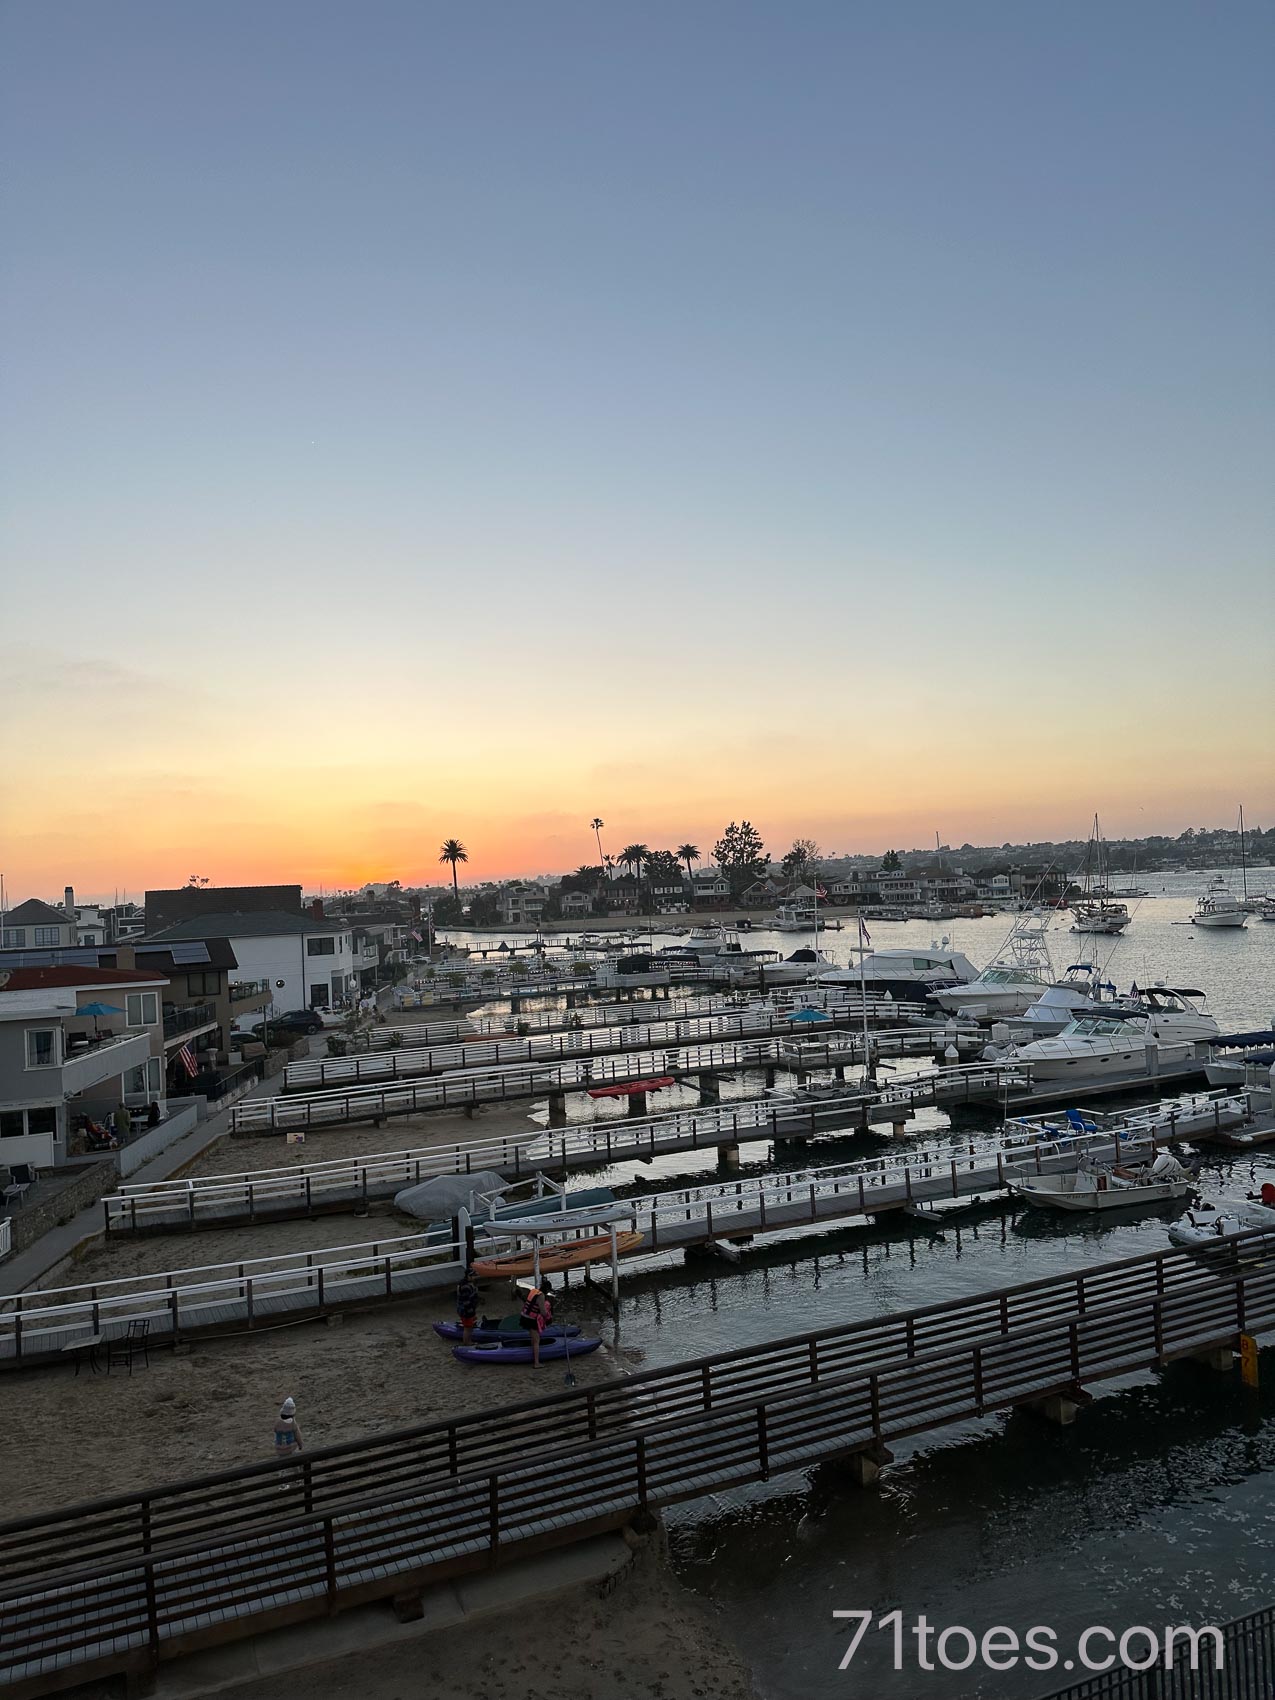 Sunset over Newport Beach harbor